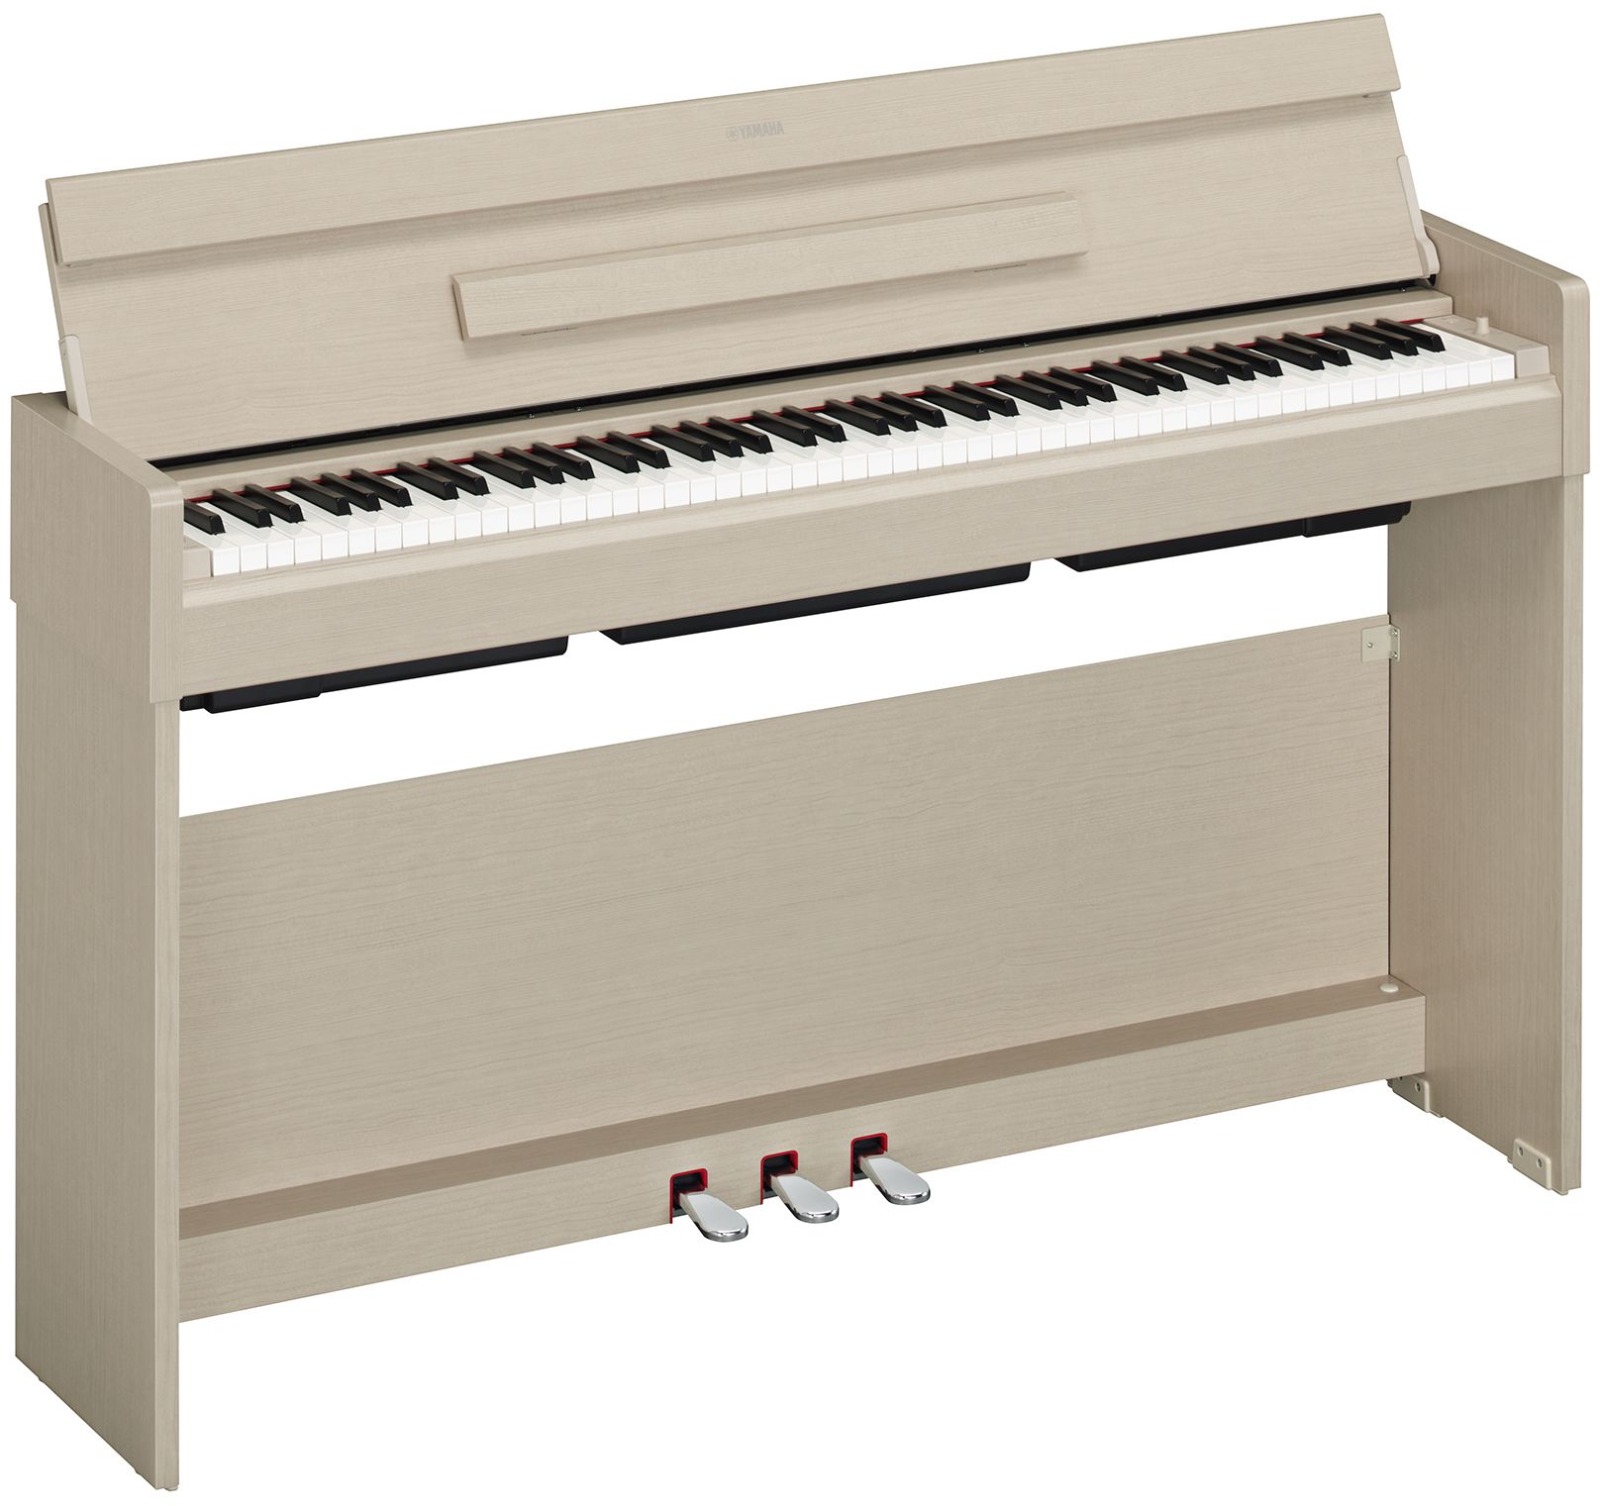 Yamaha Ydp-s35 Wa - Digital piano with stand - Variation 1